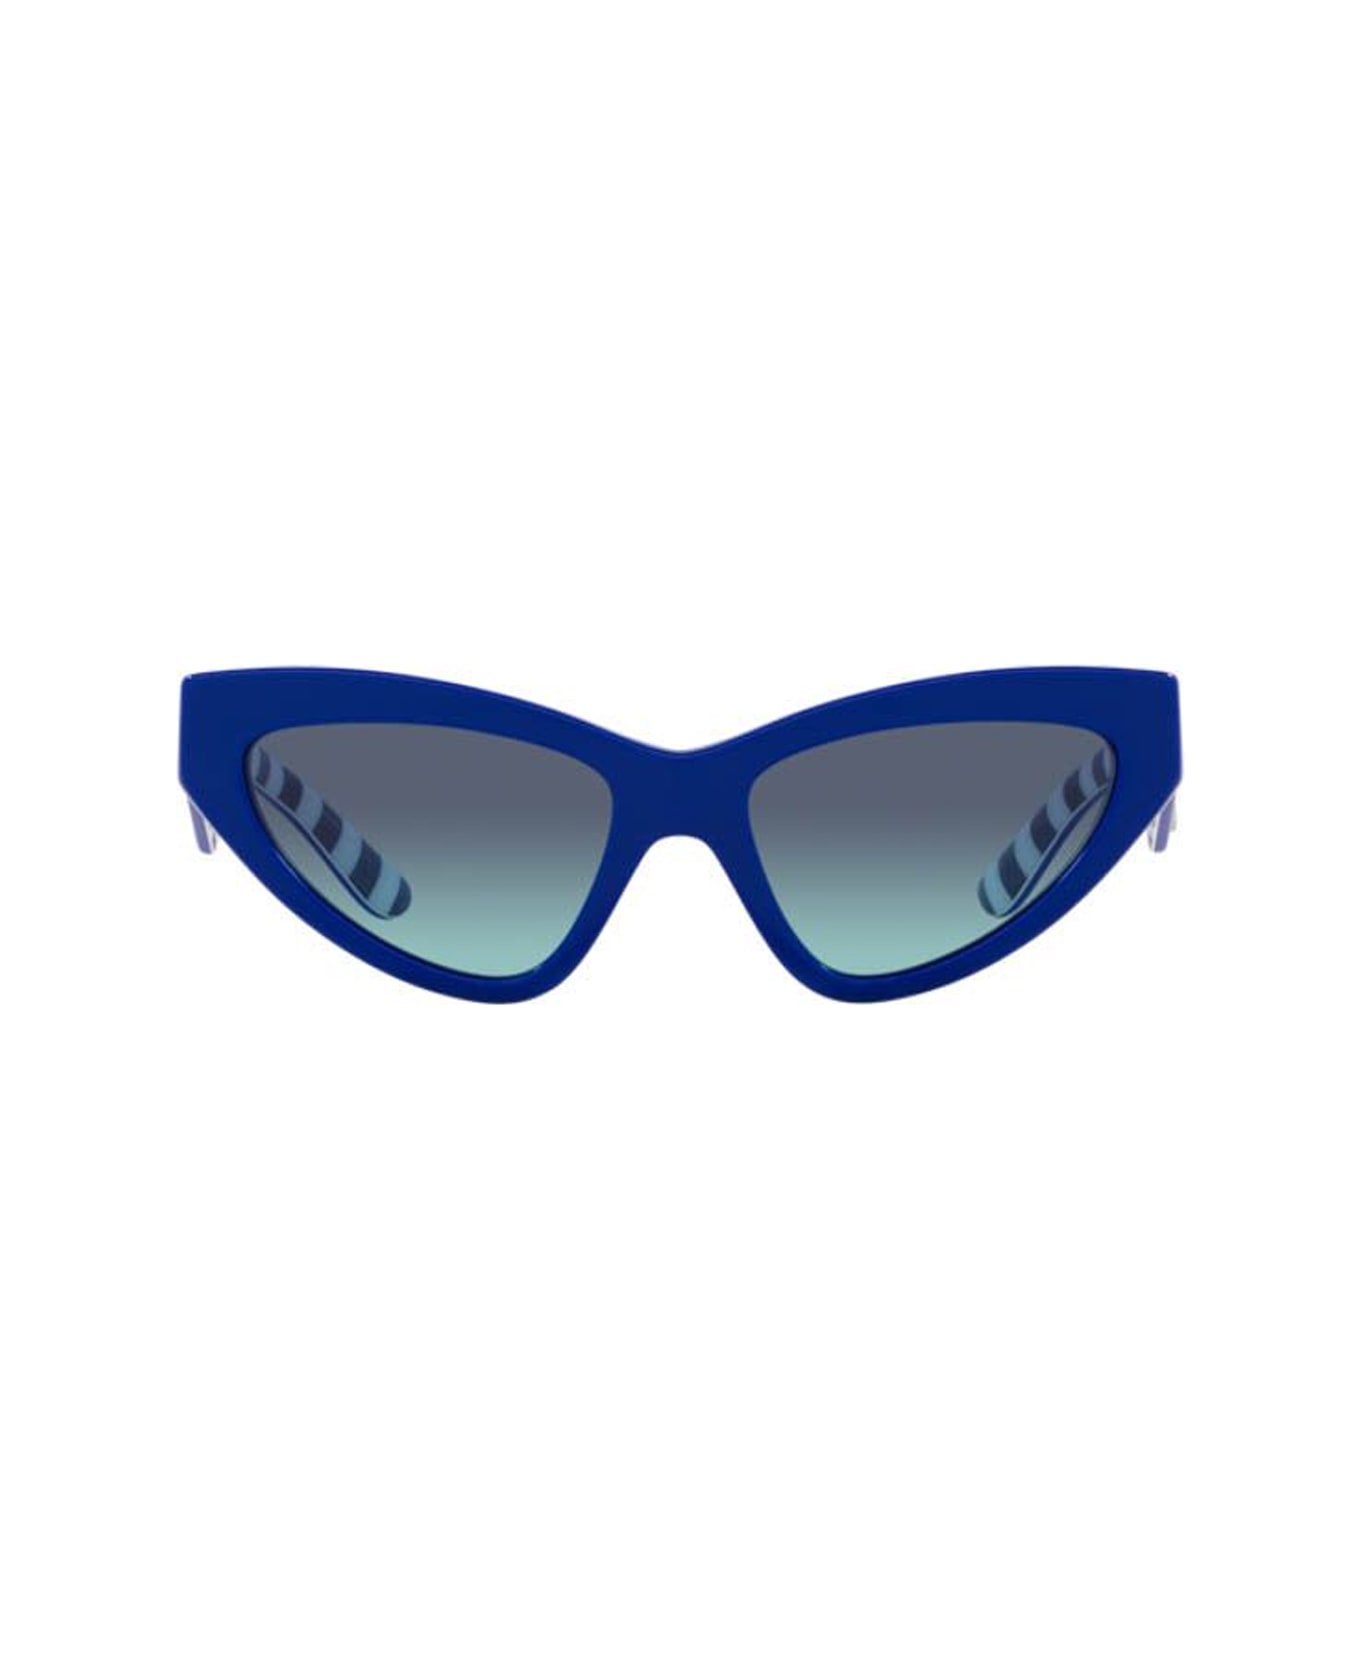 Dolce & Gabbana Eyewear Dg4439 311945 Sunglasses - Blu サングラス